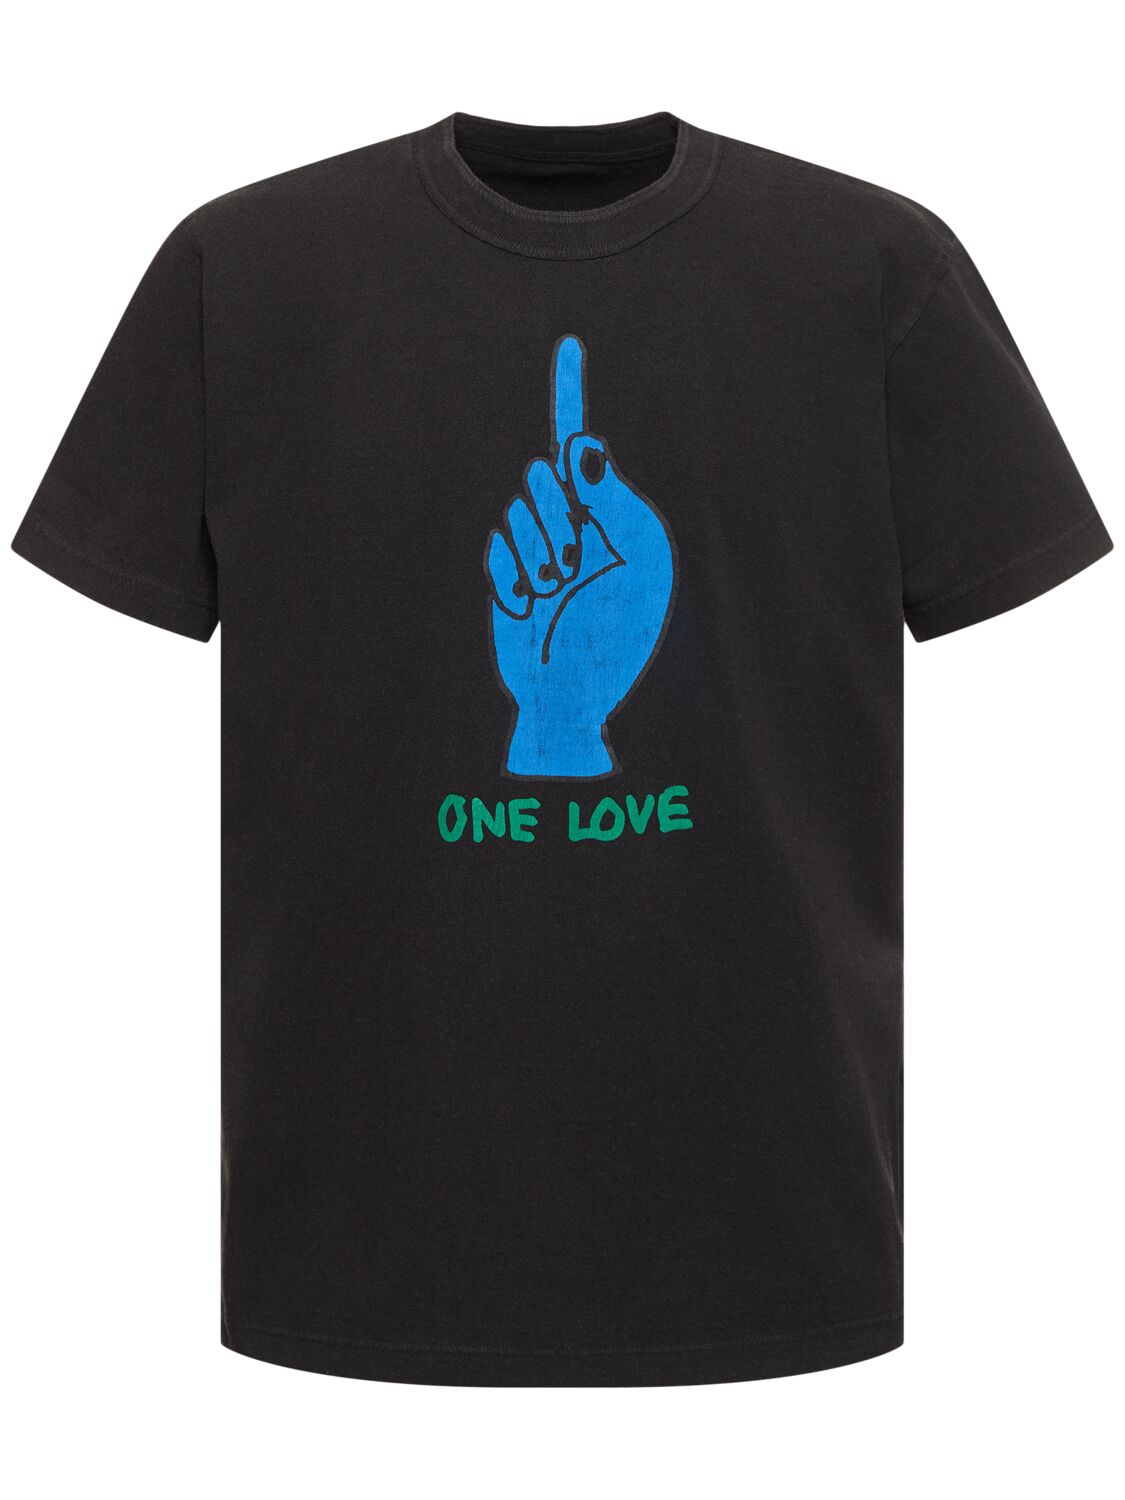 Gonz X One Love Cotton Jersey T-shirt